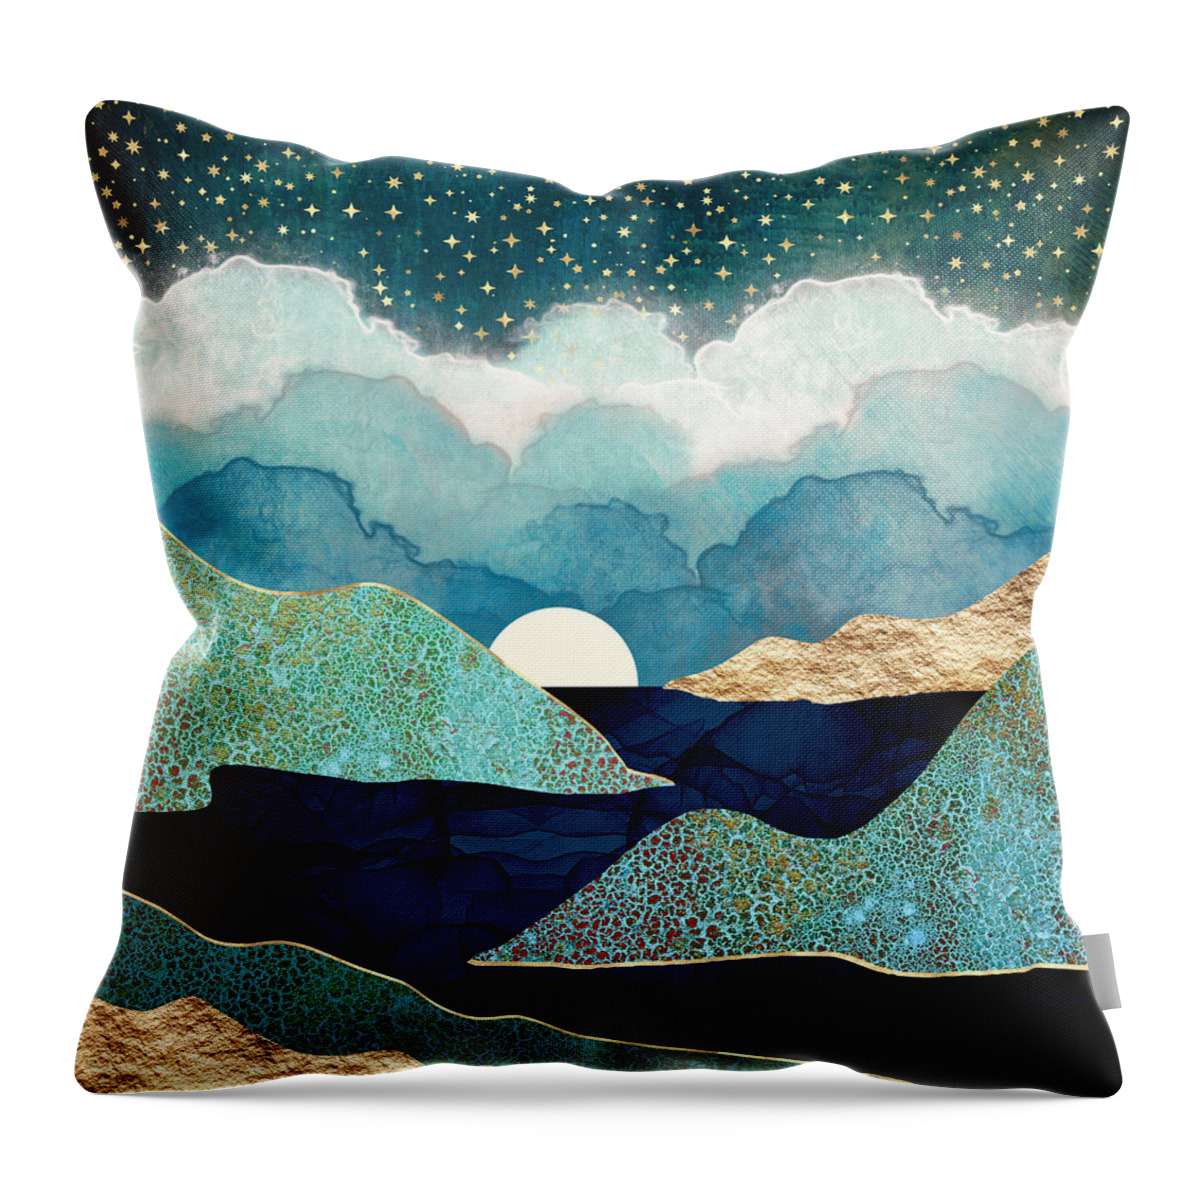 Ocean Throw Pillow featuring the digital art Ocean Clouds by Spacefrog Designs